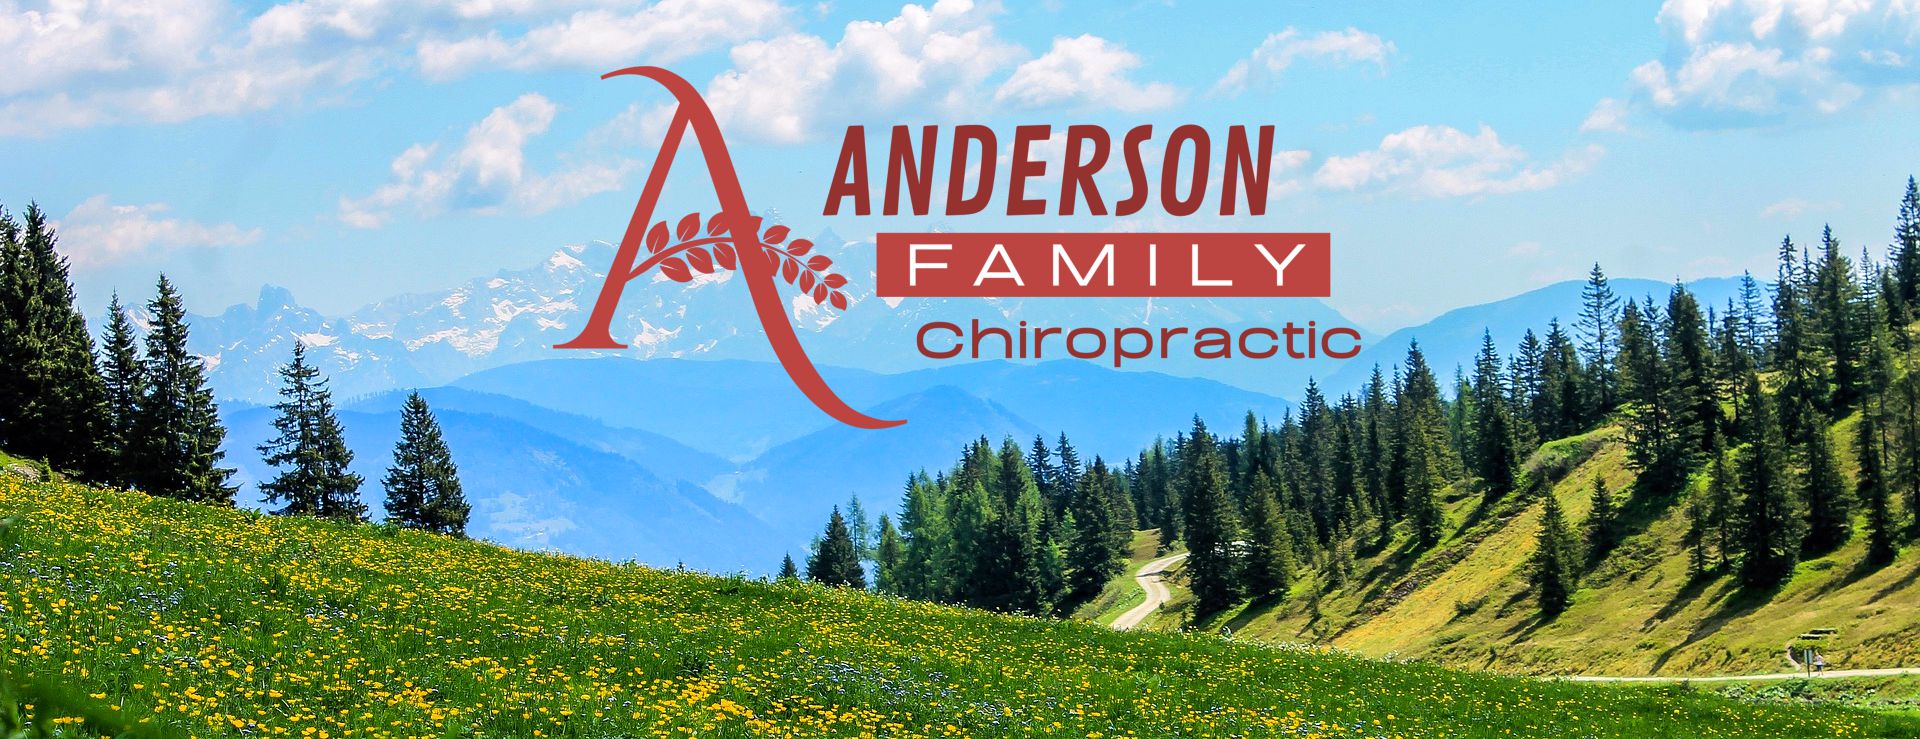 anderson-family-chiropractic-new-hero-1920x740